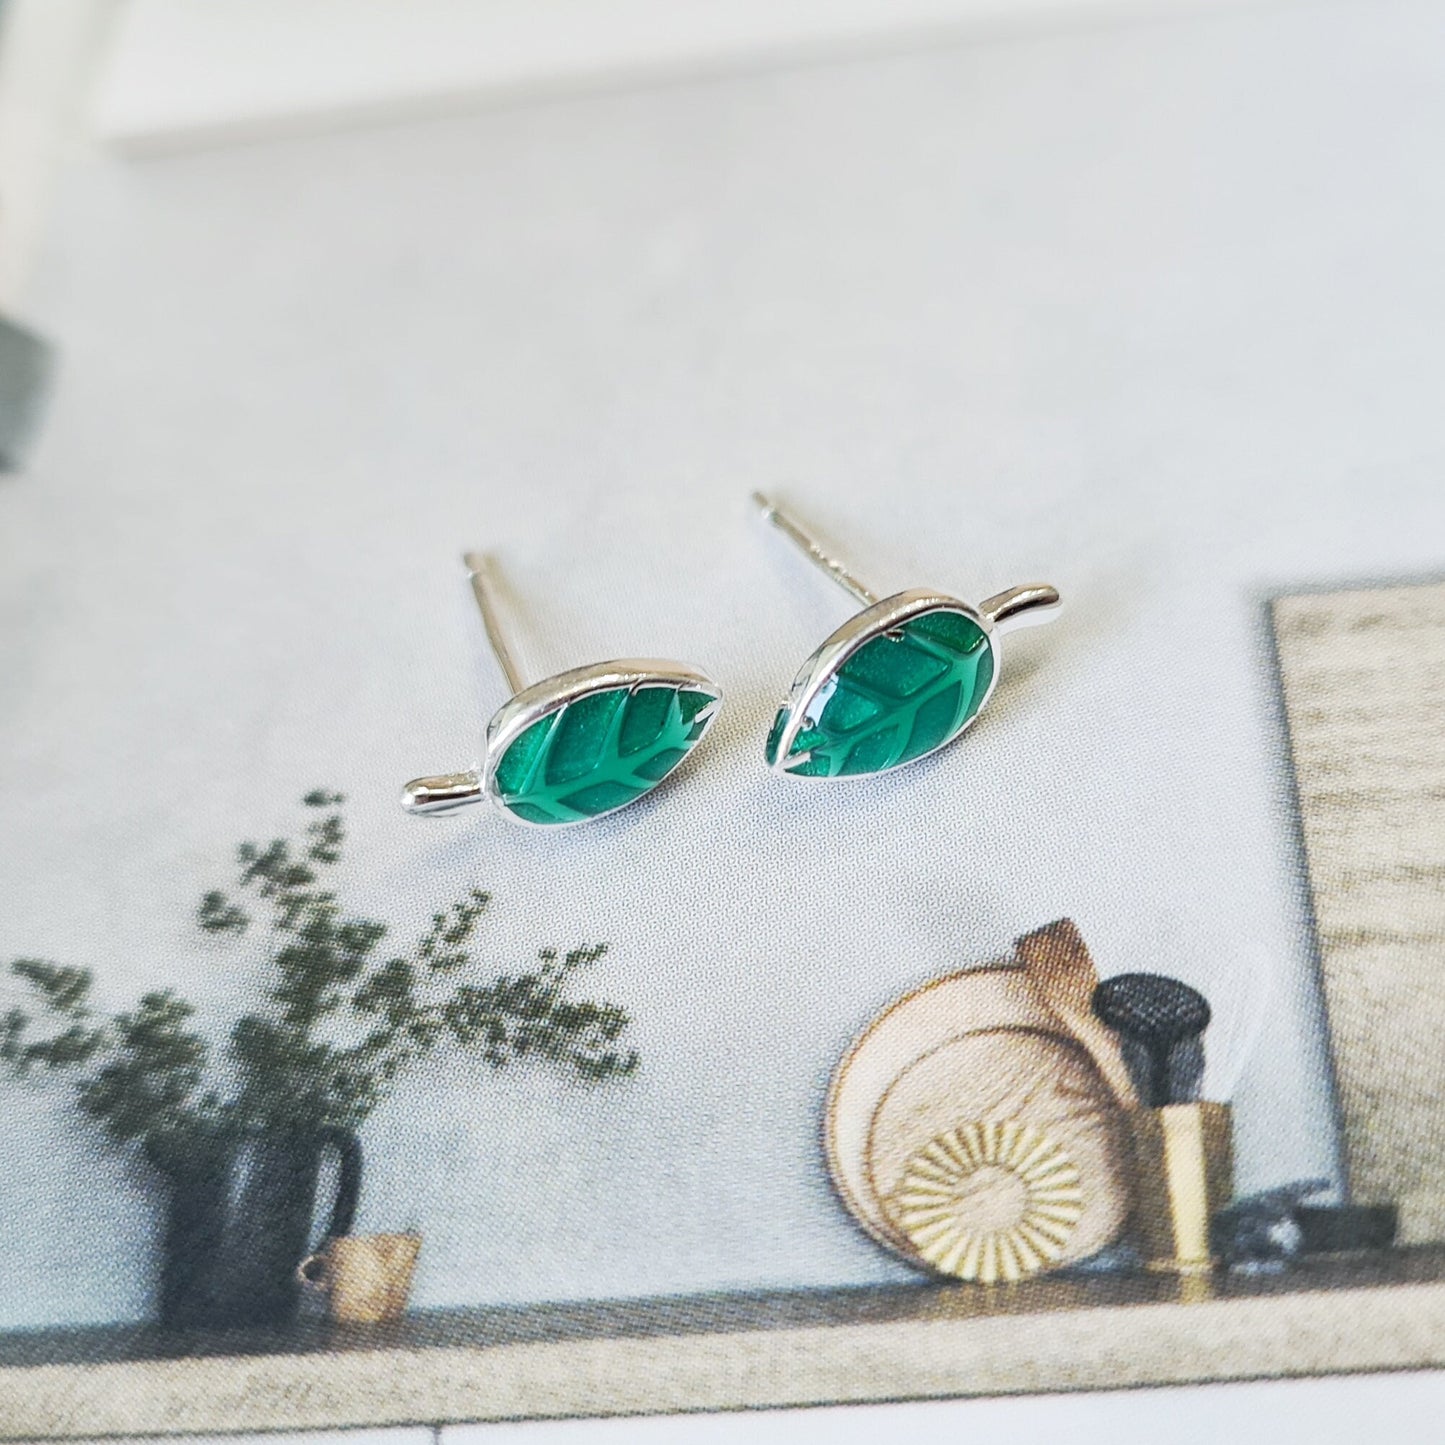 925 Sterling silver Mini Small Green Leaf Stud Earrings with Enamel Details everyday earrings earrings for girls